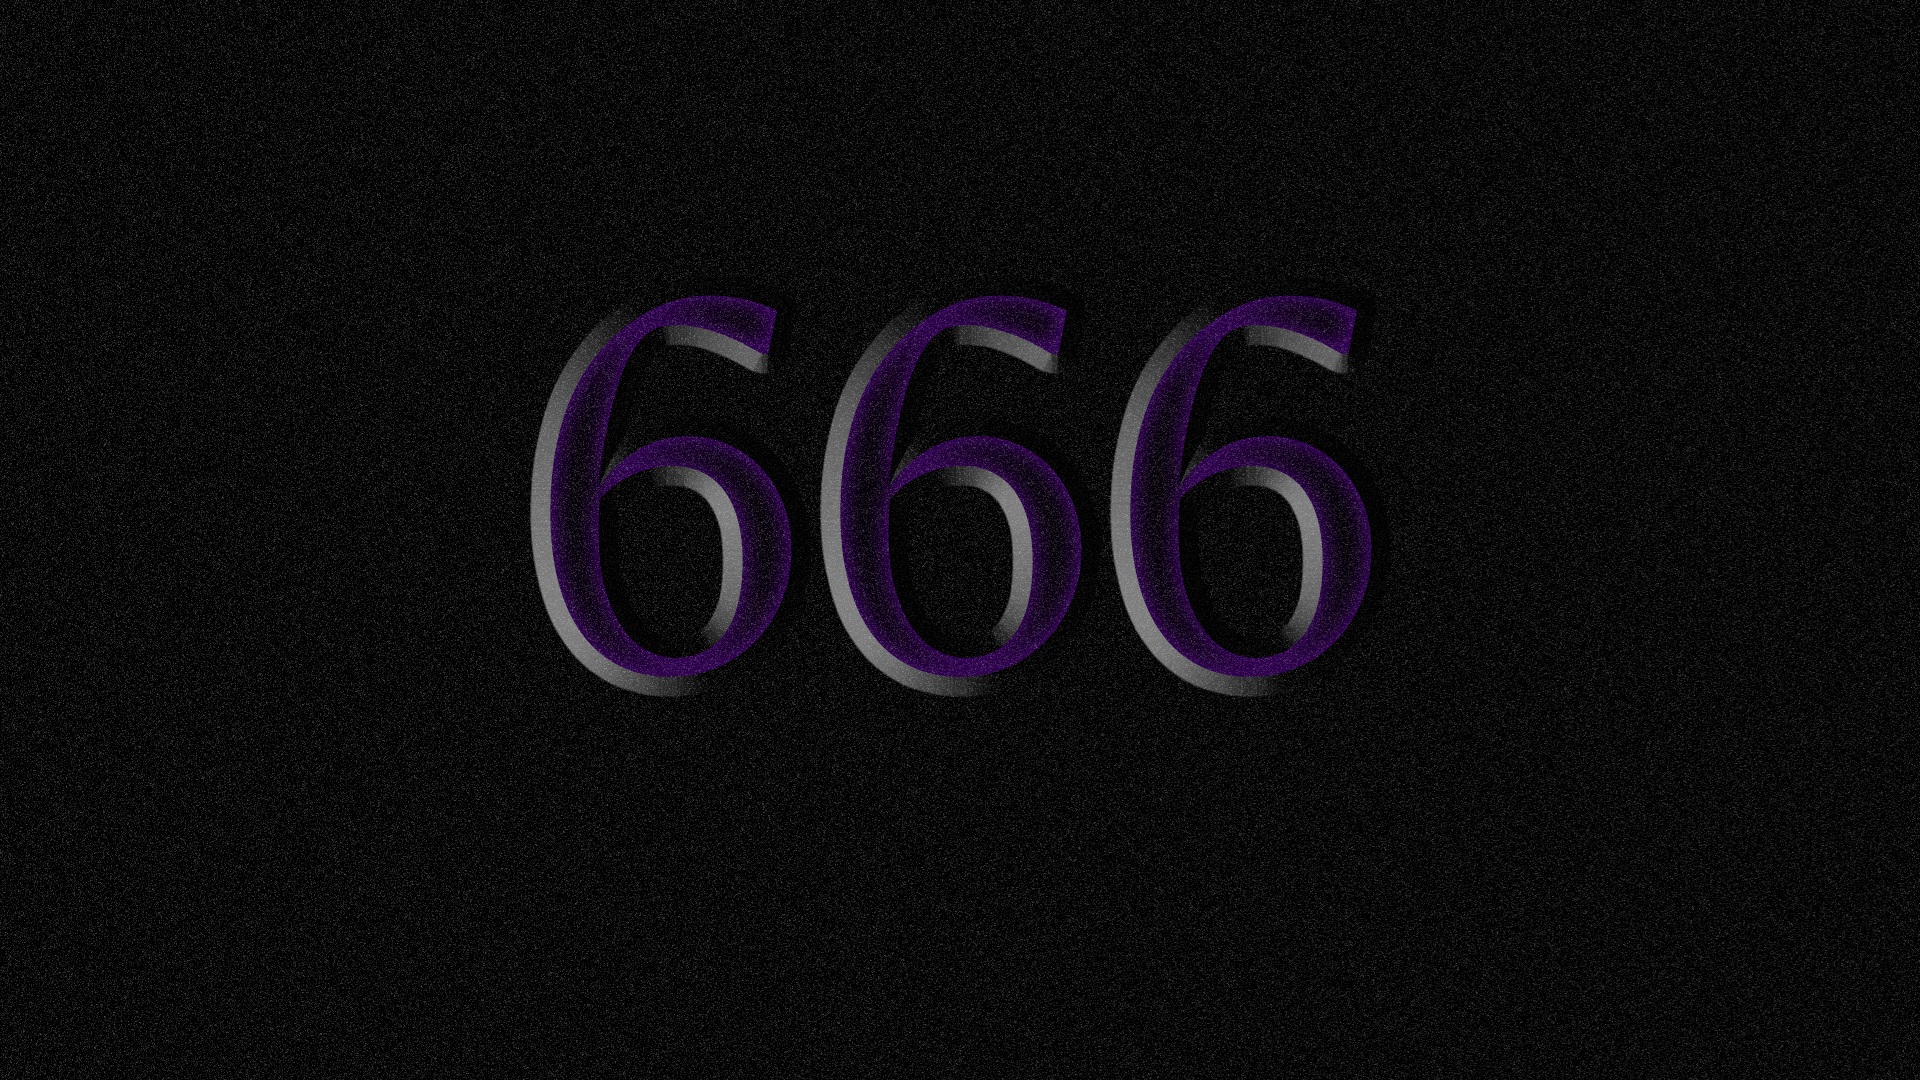 Number 666 the satan number